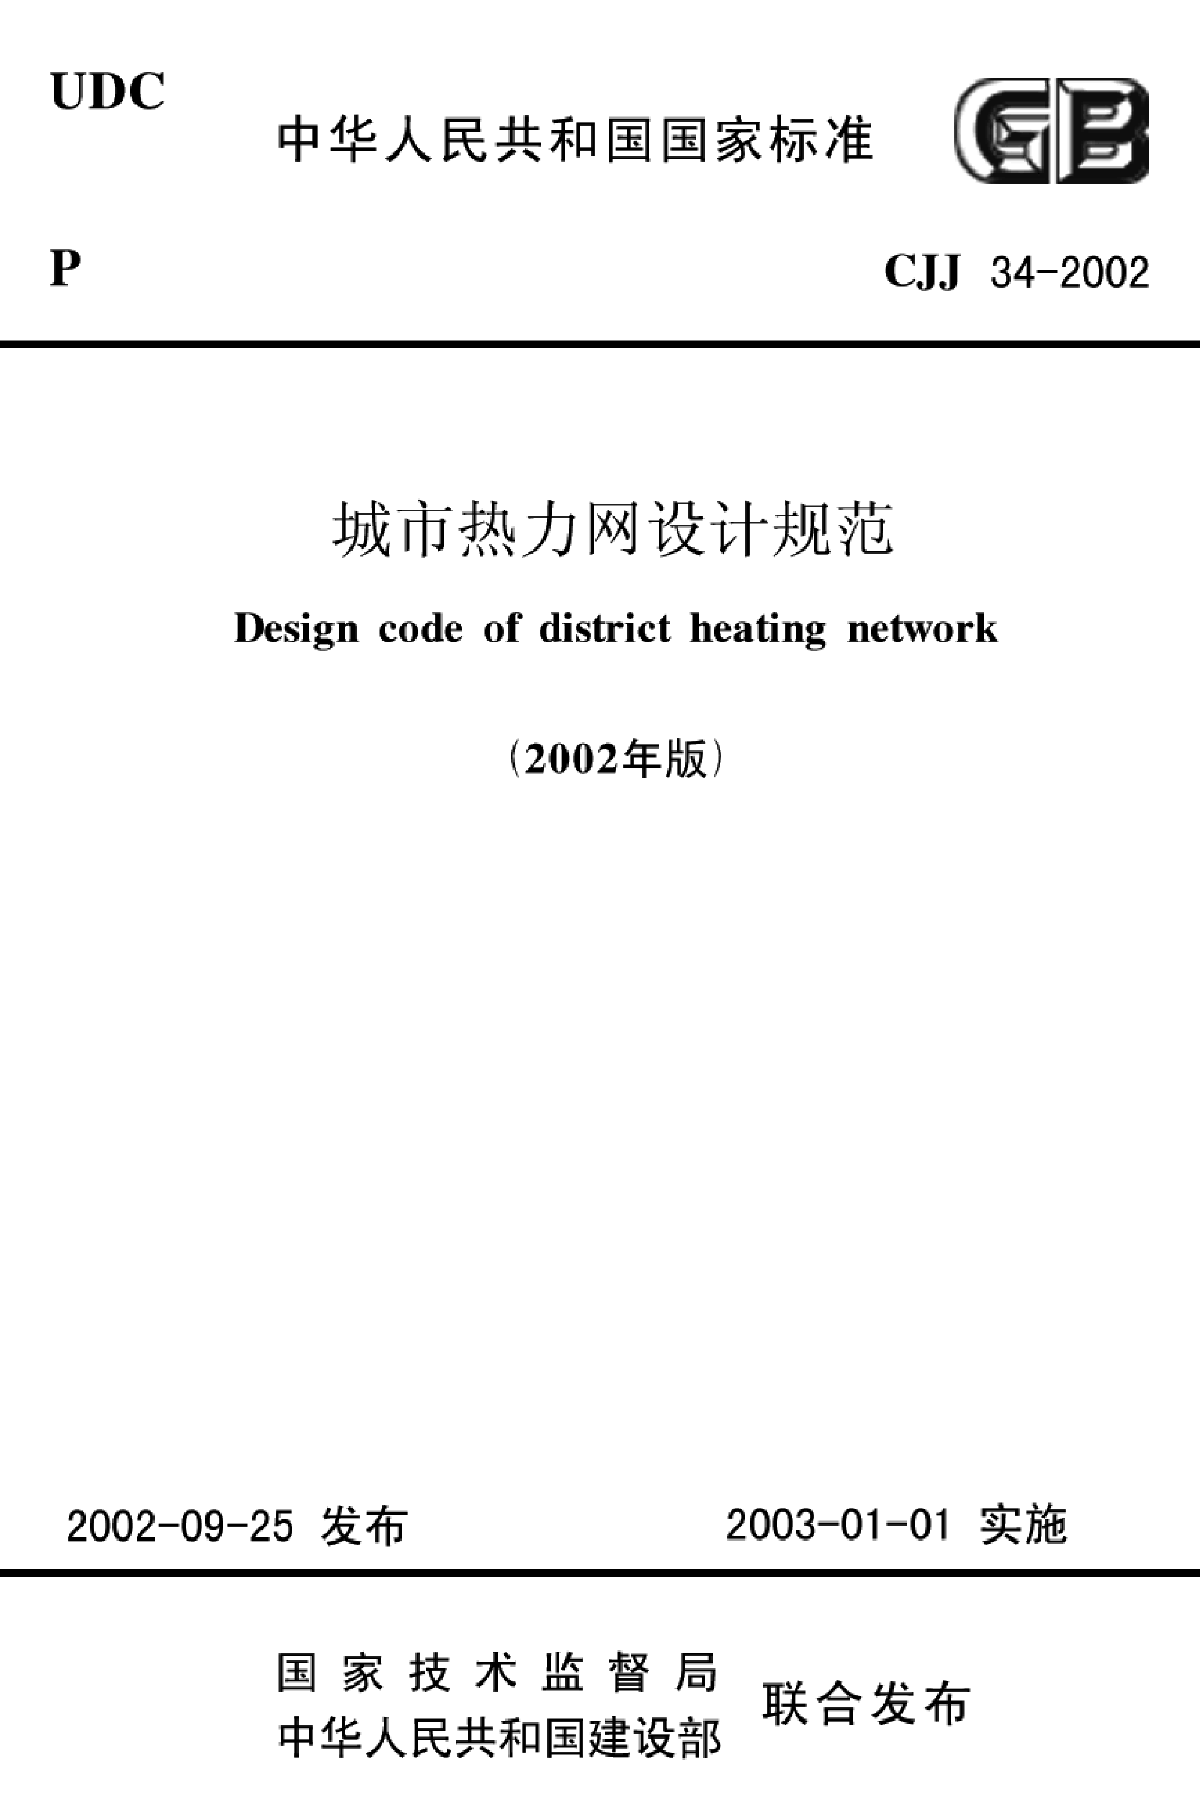 CJJ 34-2002城市热力网设计规范-图一